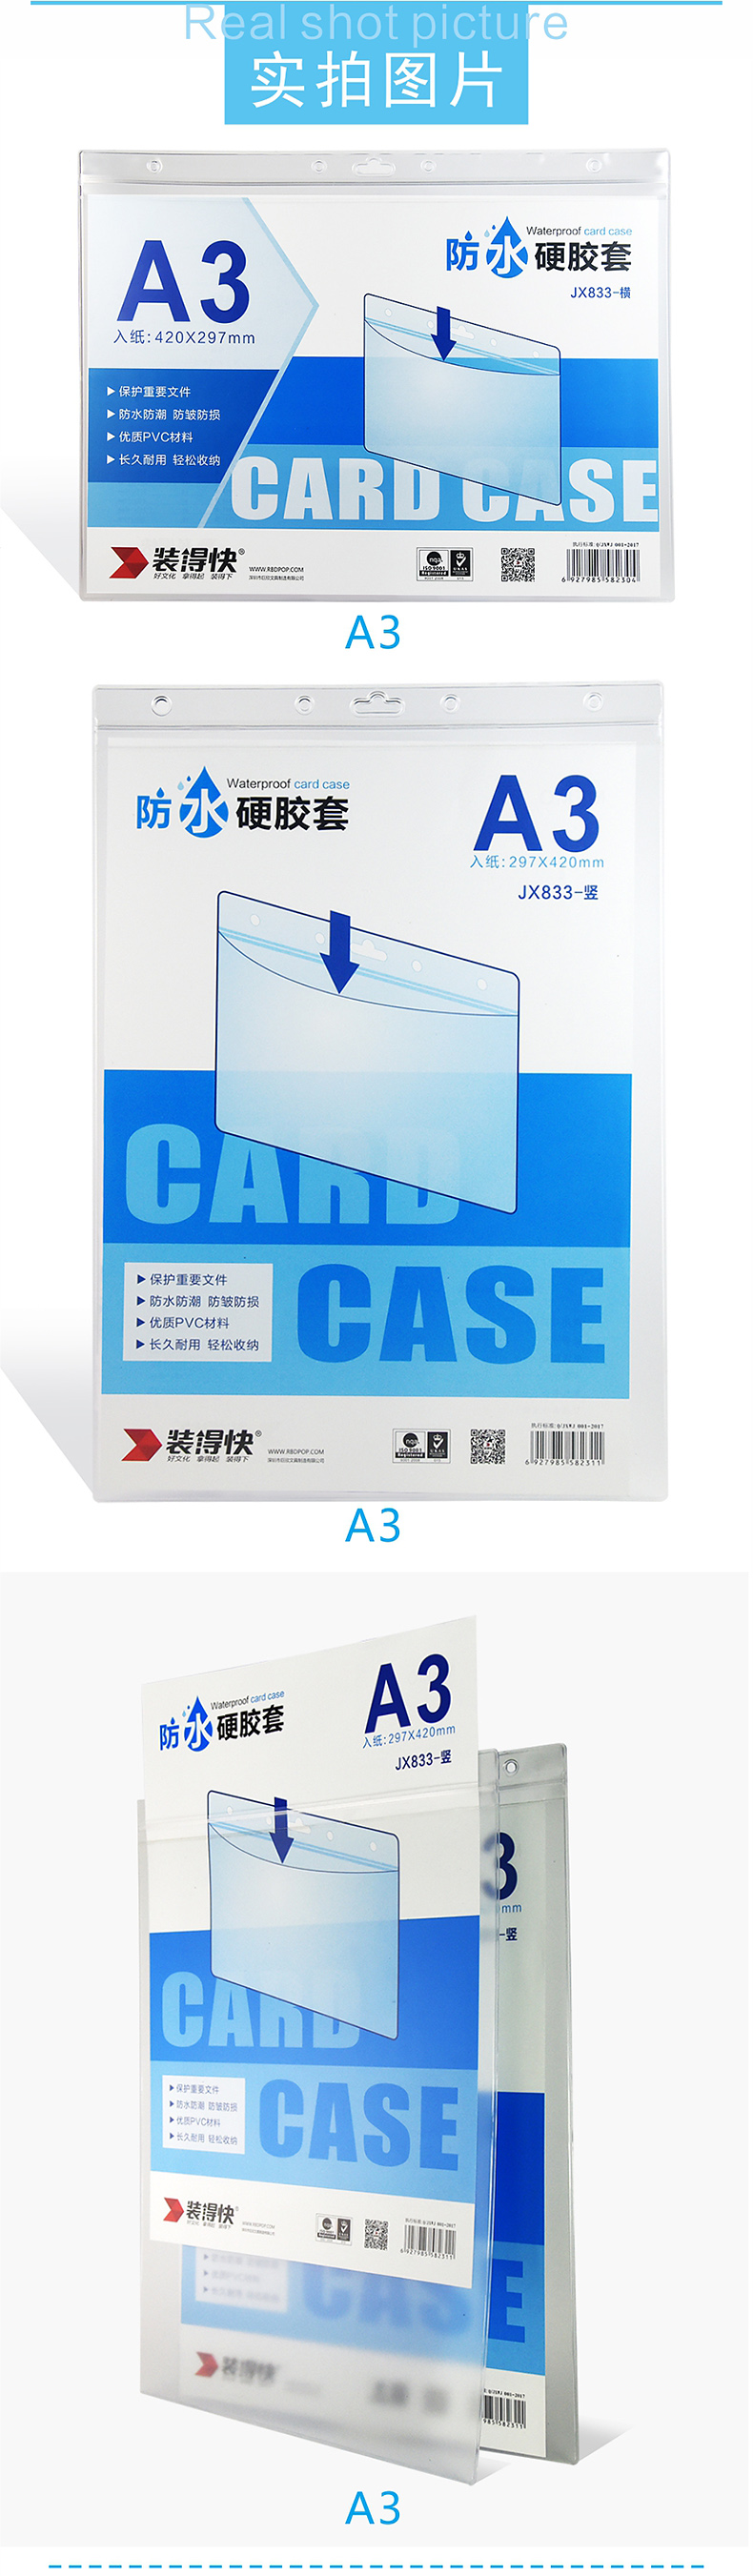 A3 waterproof document holder transparent